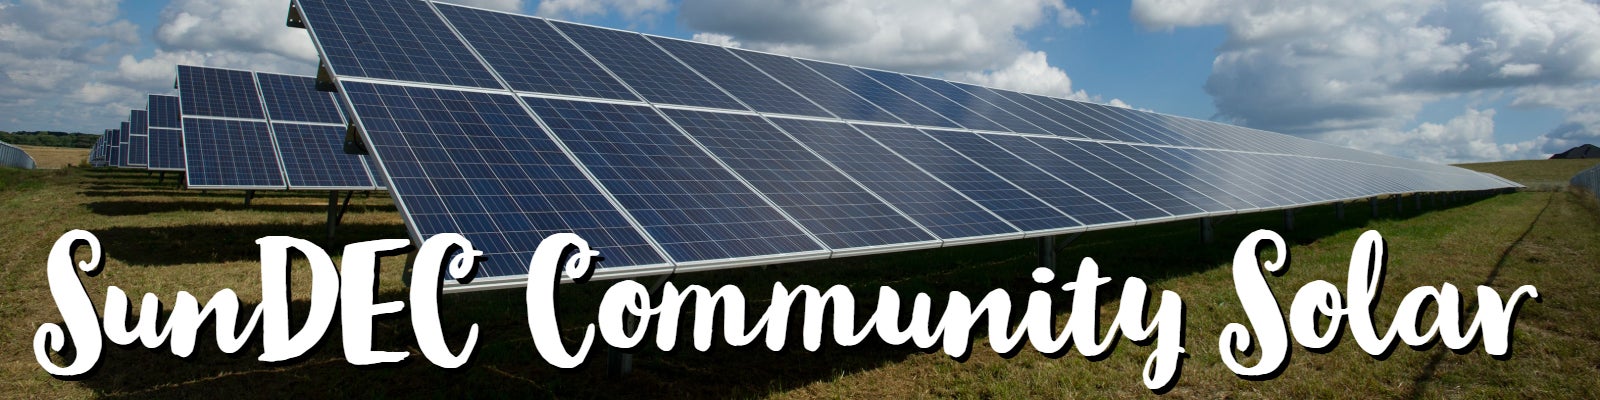 community solar photo